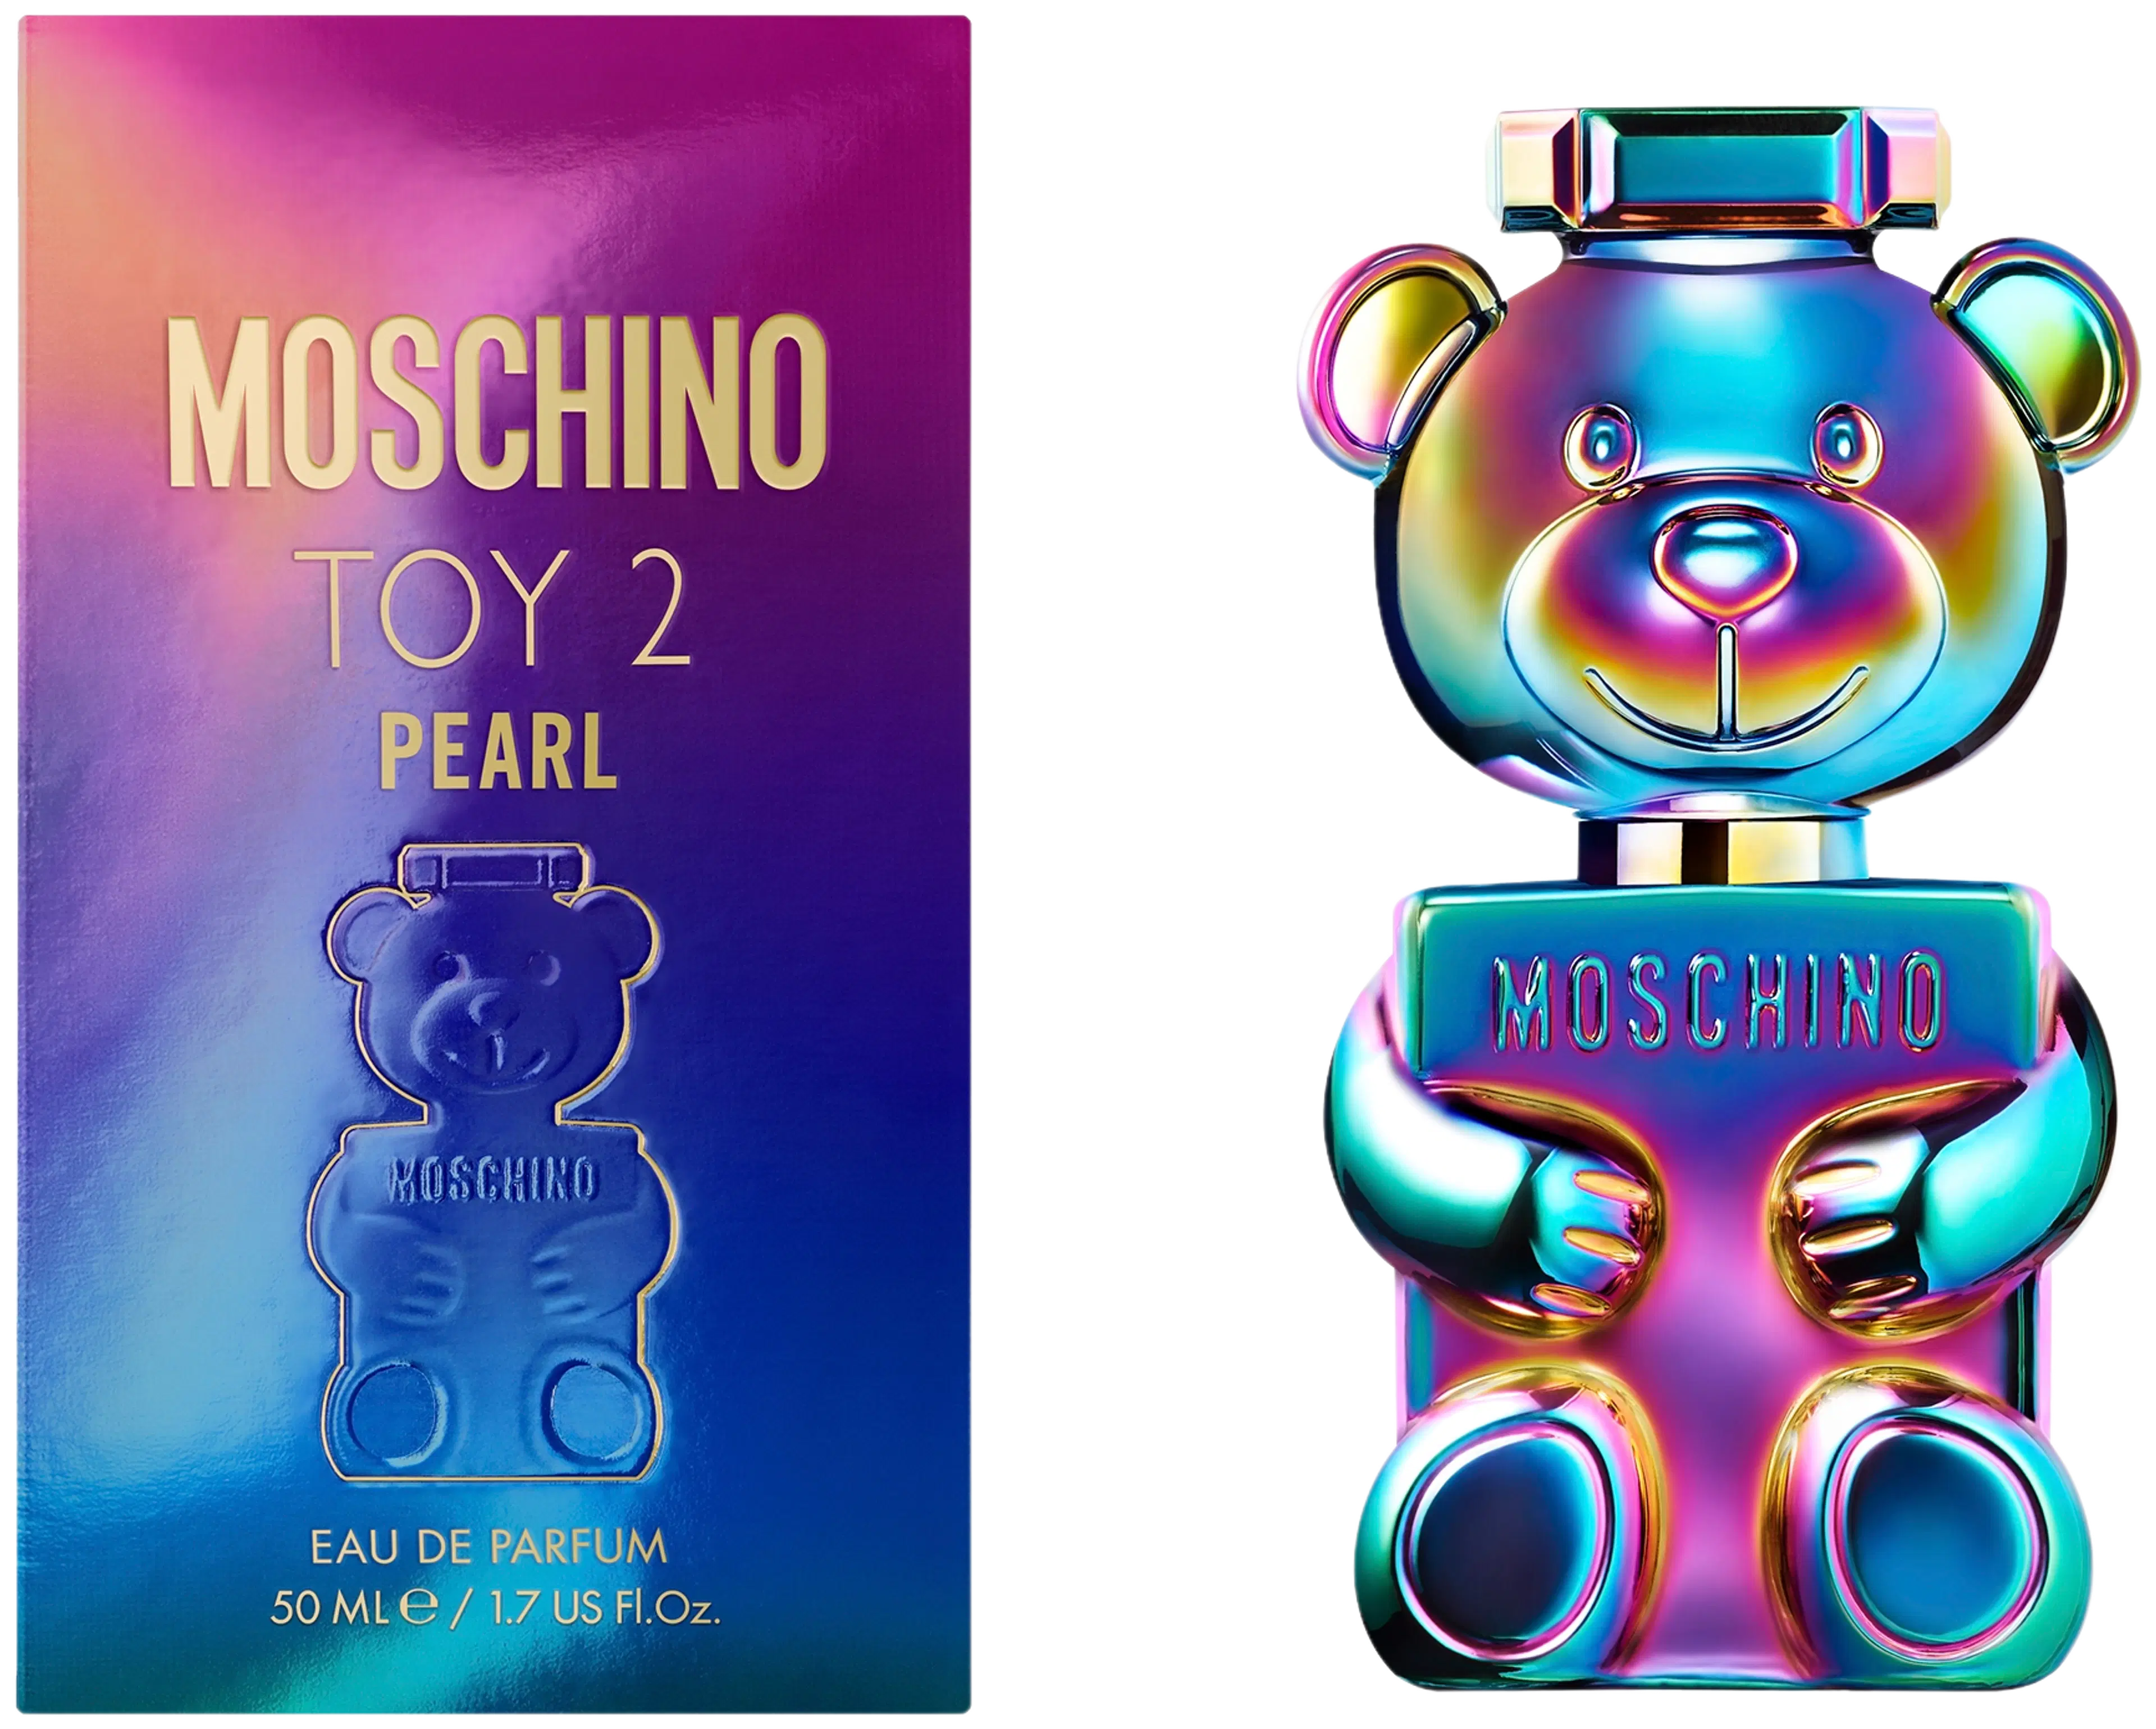 Moschino Toy 2 Pearl Eau de Parfum 50 ml